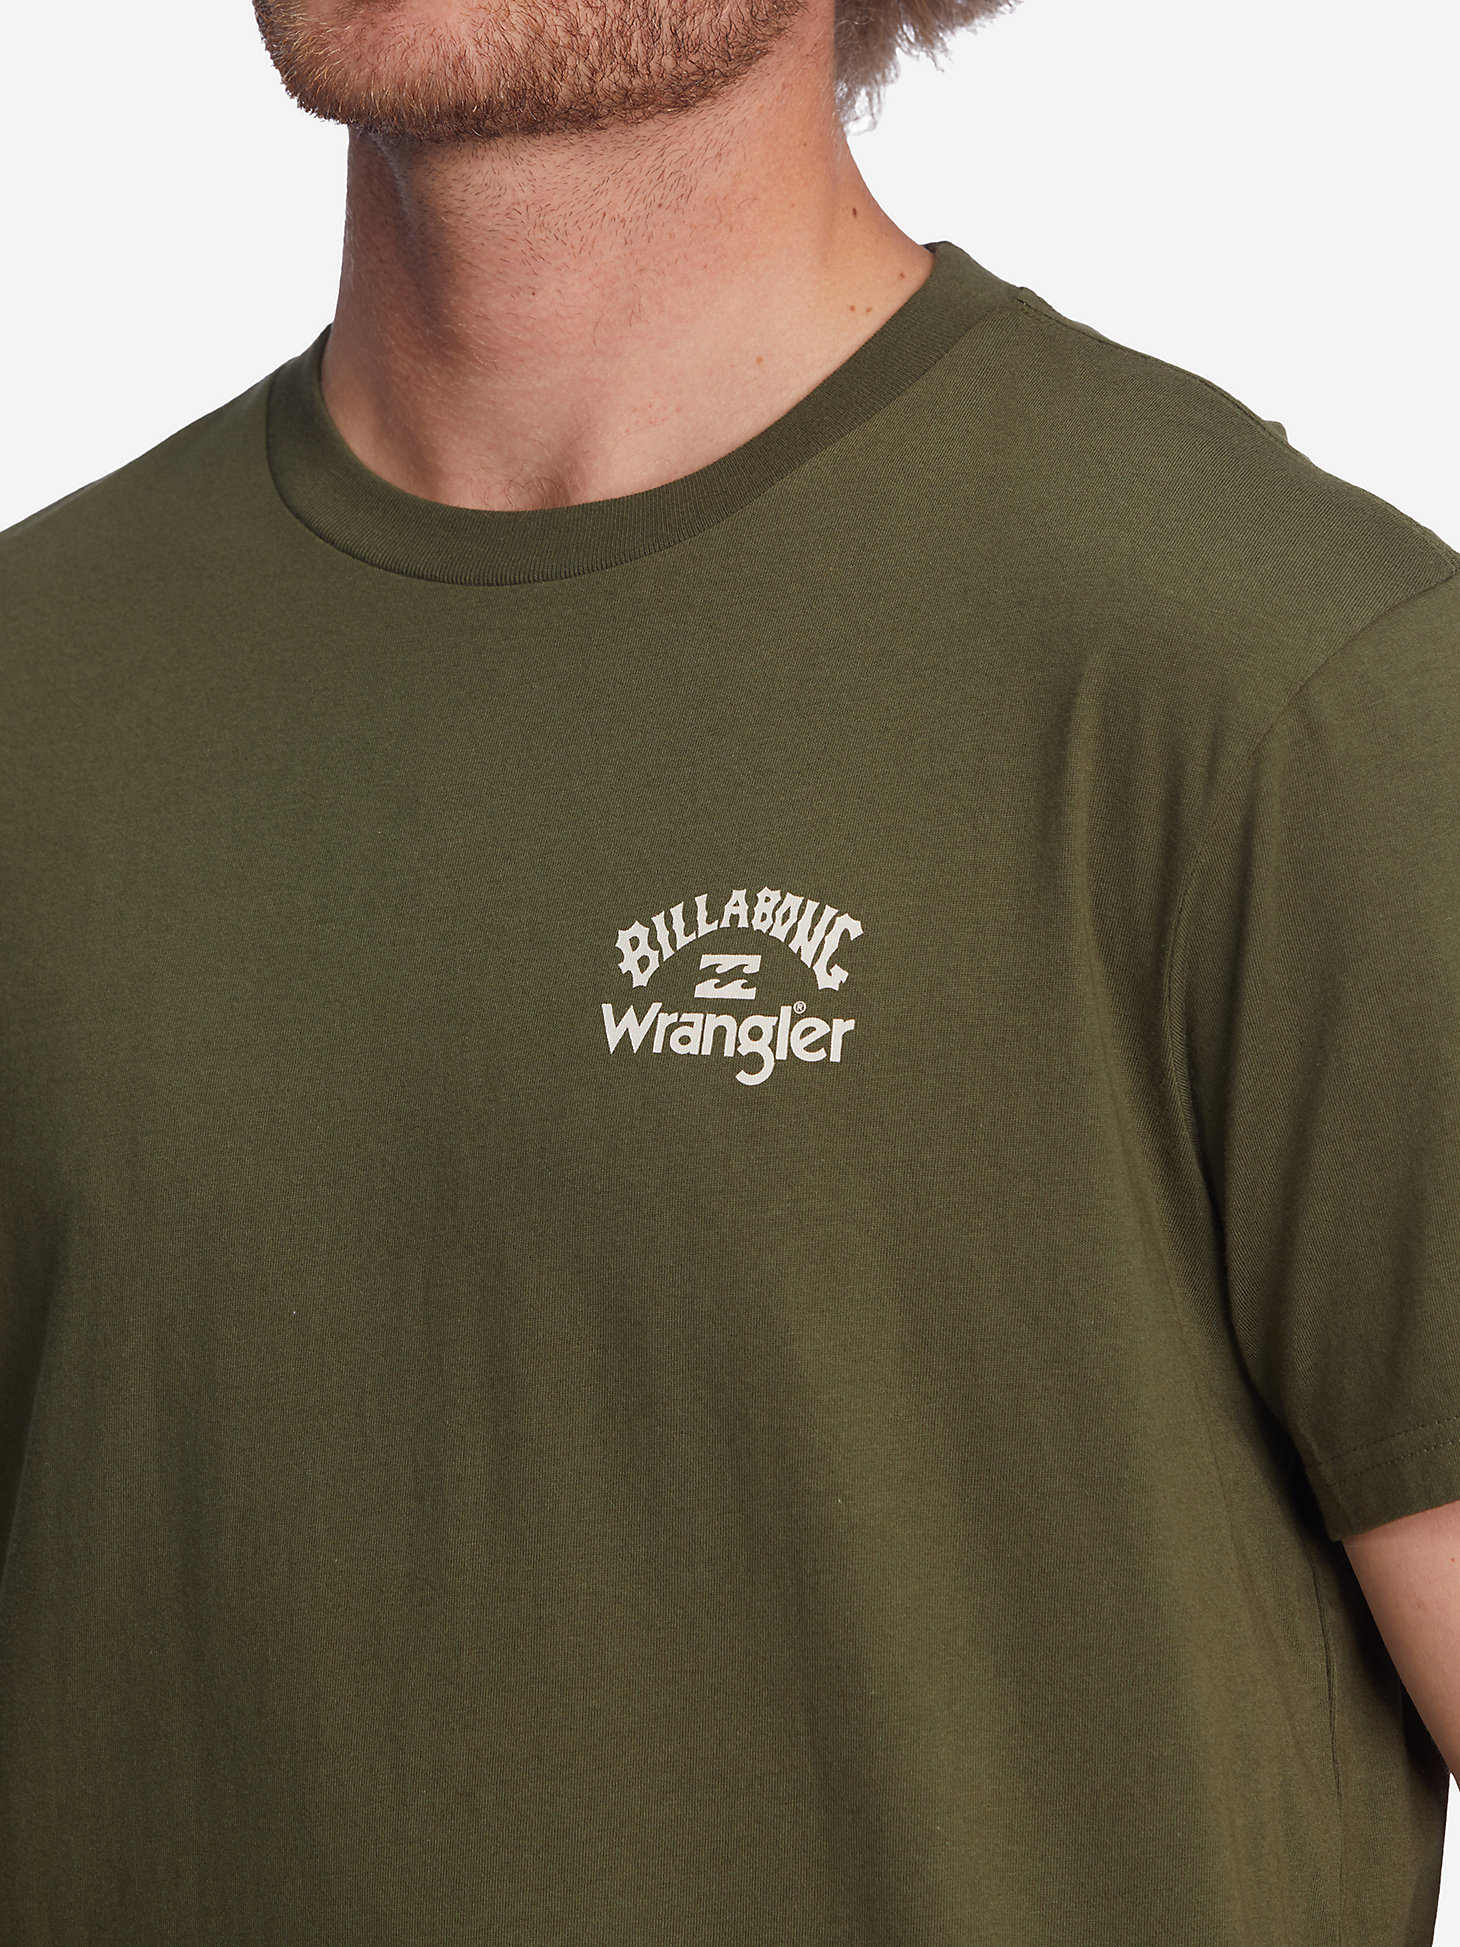 Billabong x Wrangler® Men's Rancher Horizon Graphic T-Shirt in Military alternative view 2